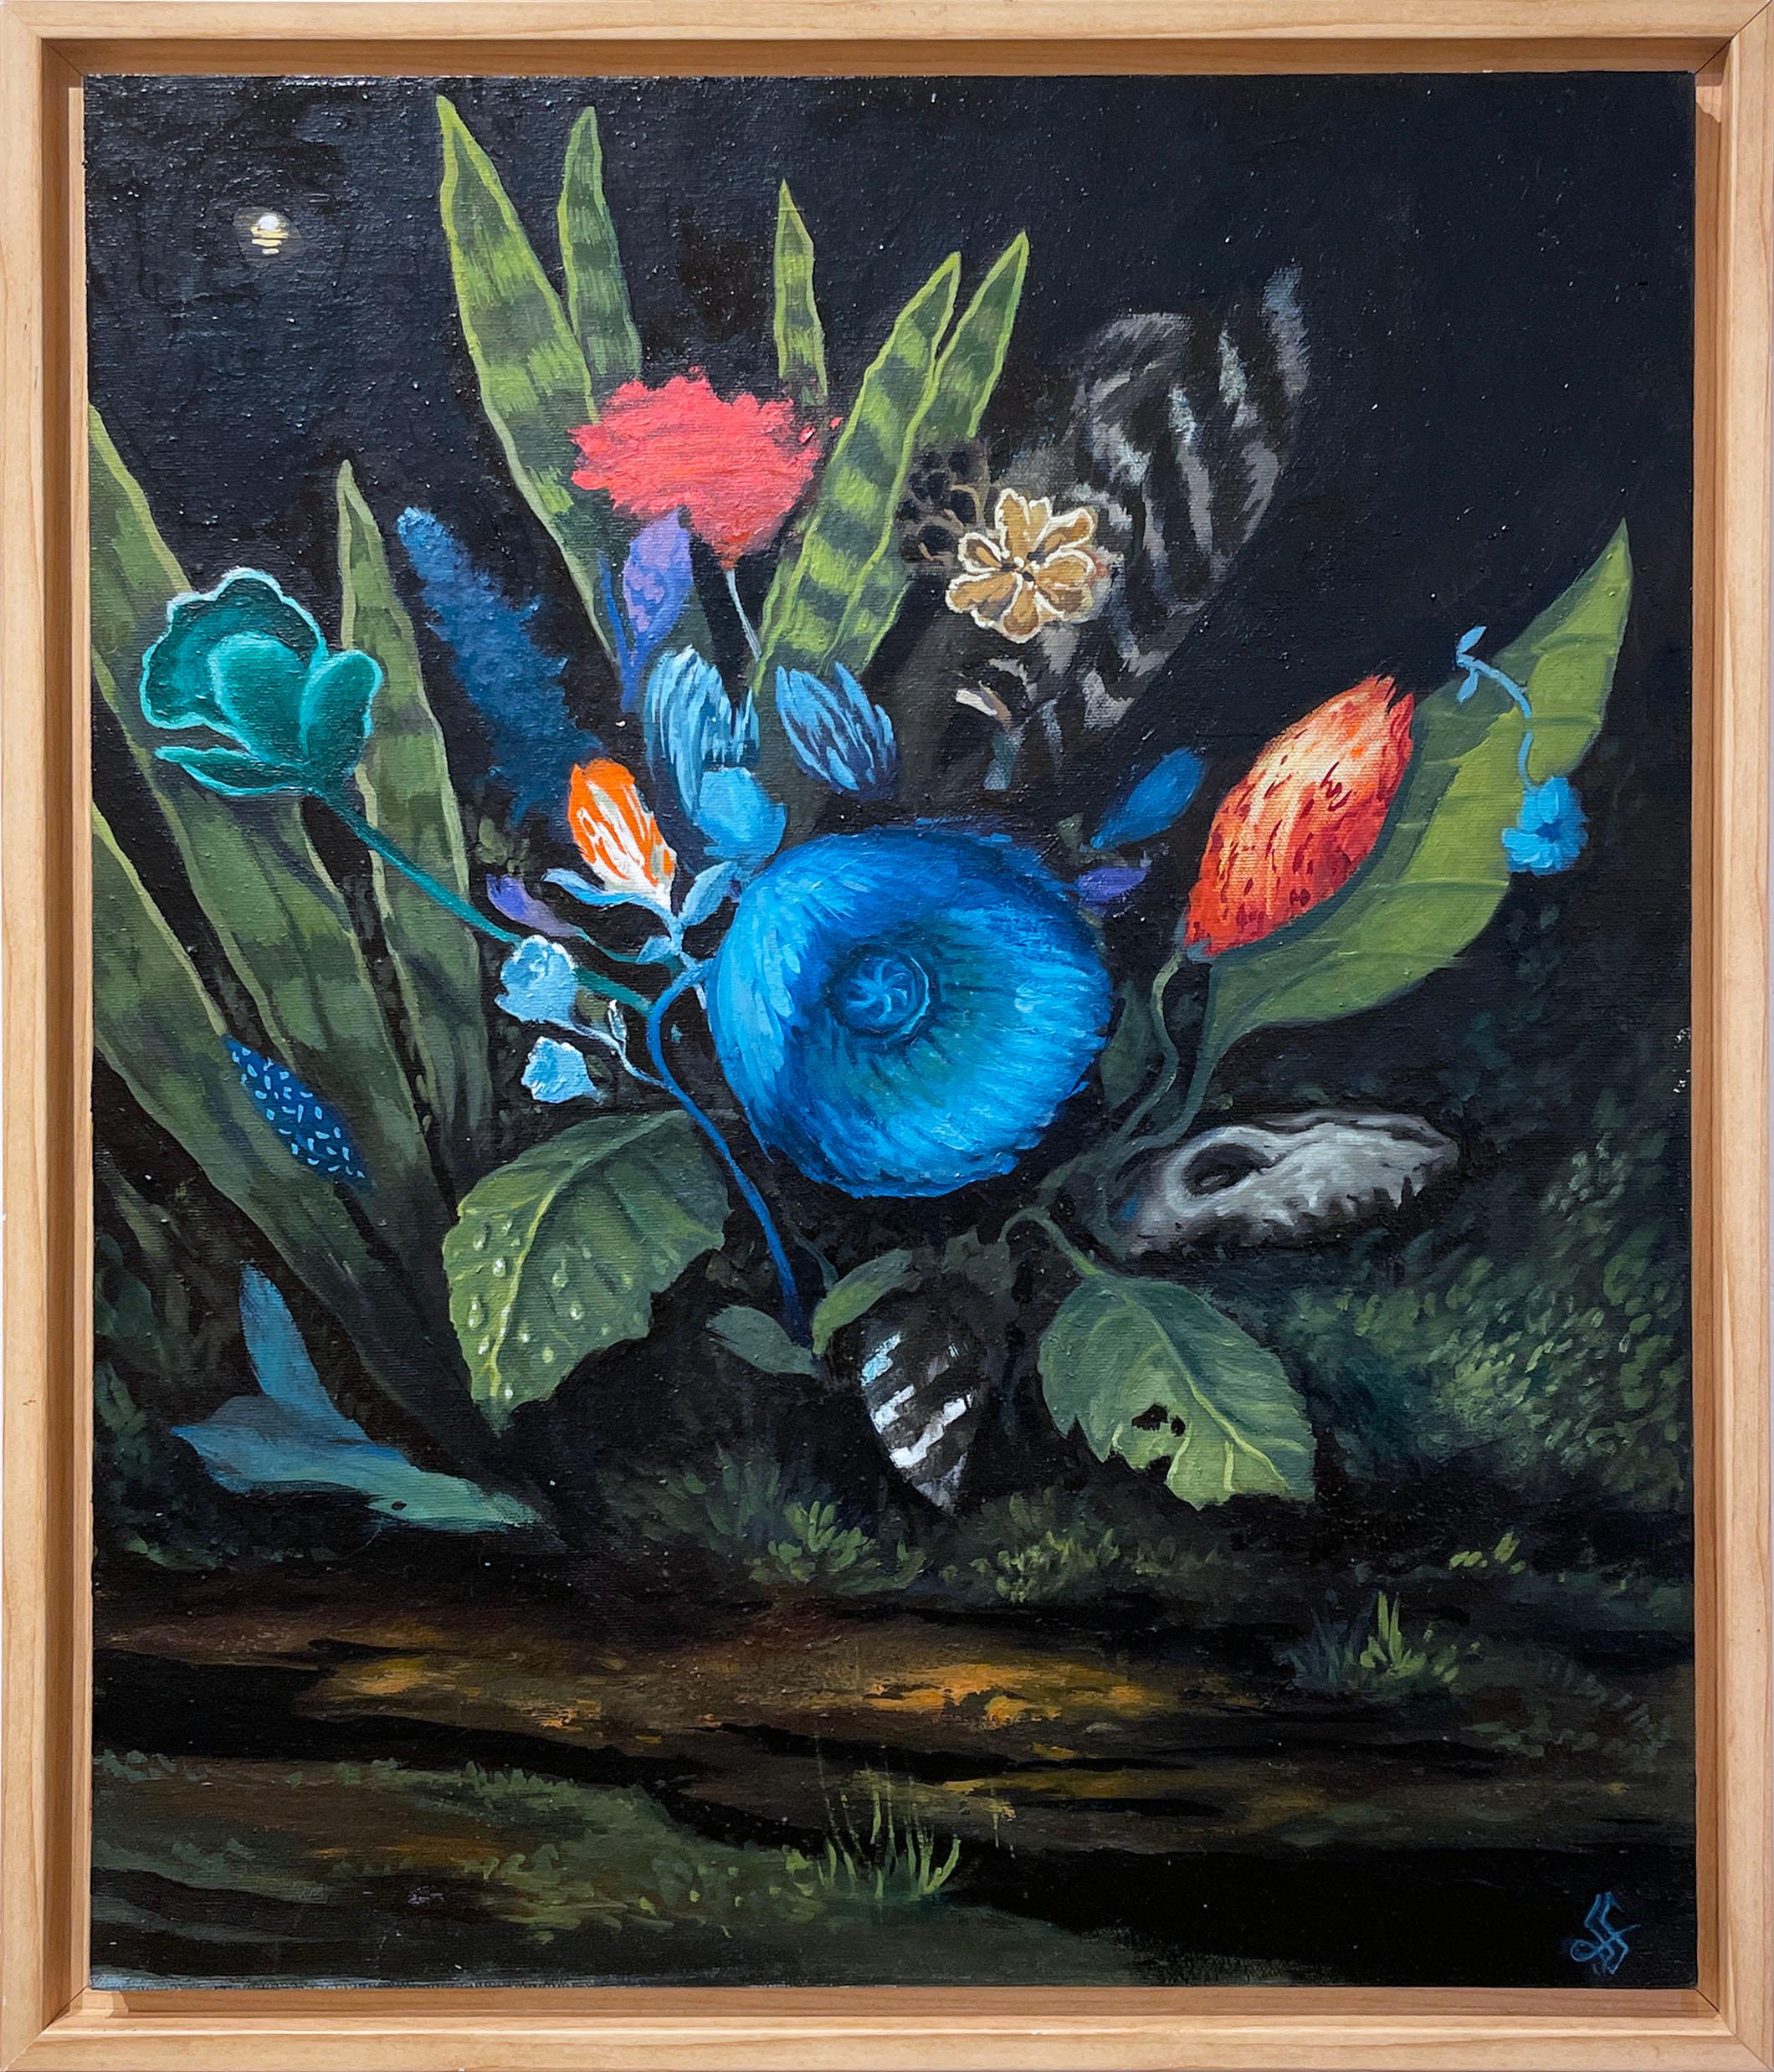 Fabricio Suarez Landscape Painting - What Lies Beneath (2021), oil on linen, dark landscape, flowers, garden, night